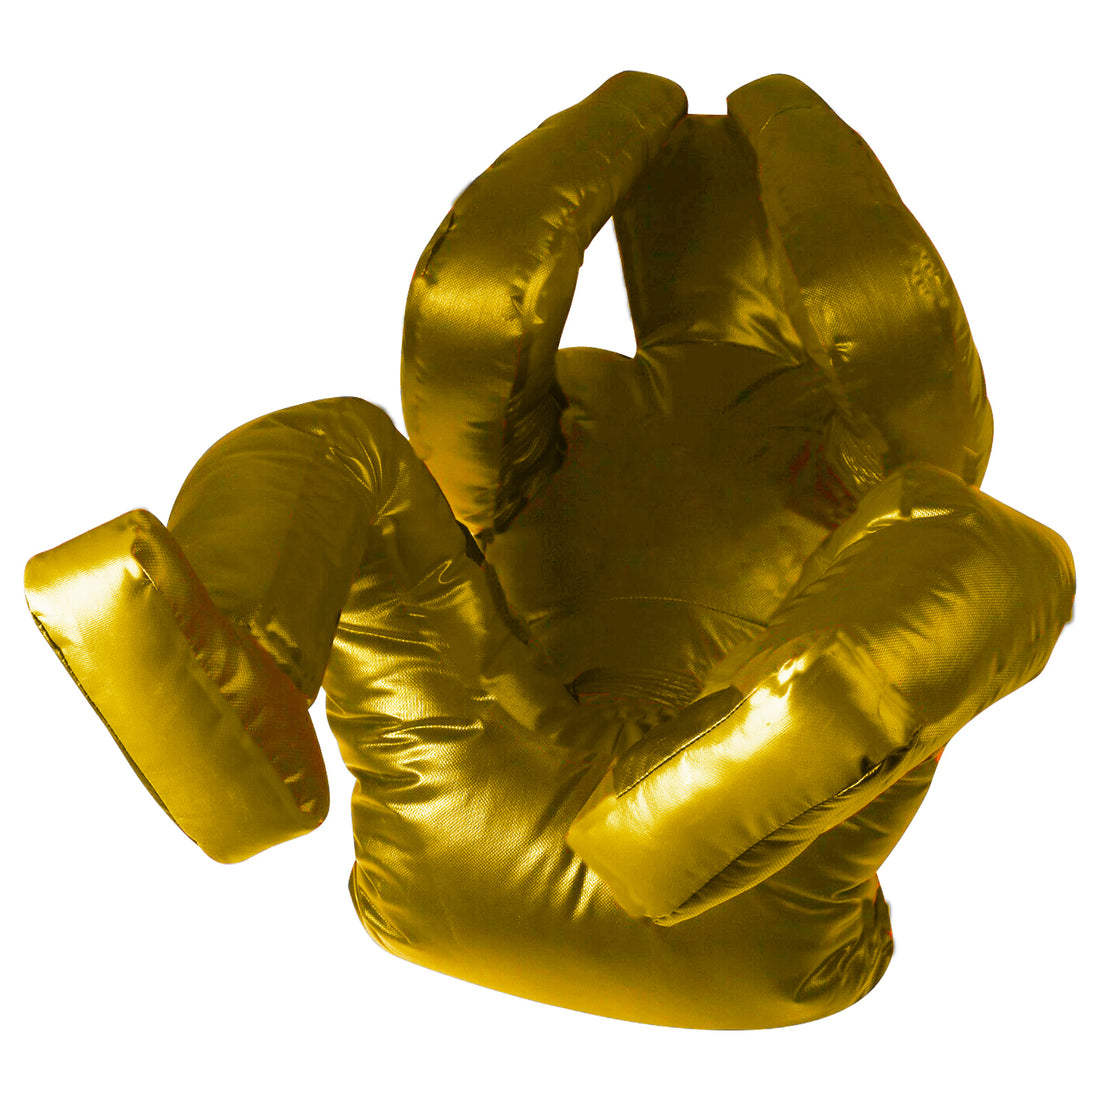 Special Limited Edition Brazilian Jiu Jitsu Premium Leather Grappling Dummy Boxing judo MMA - Gold- Professional Range - DEFENDING POSITION